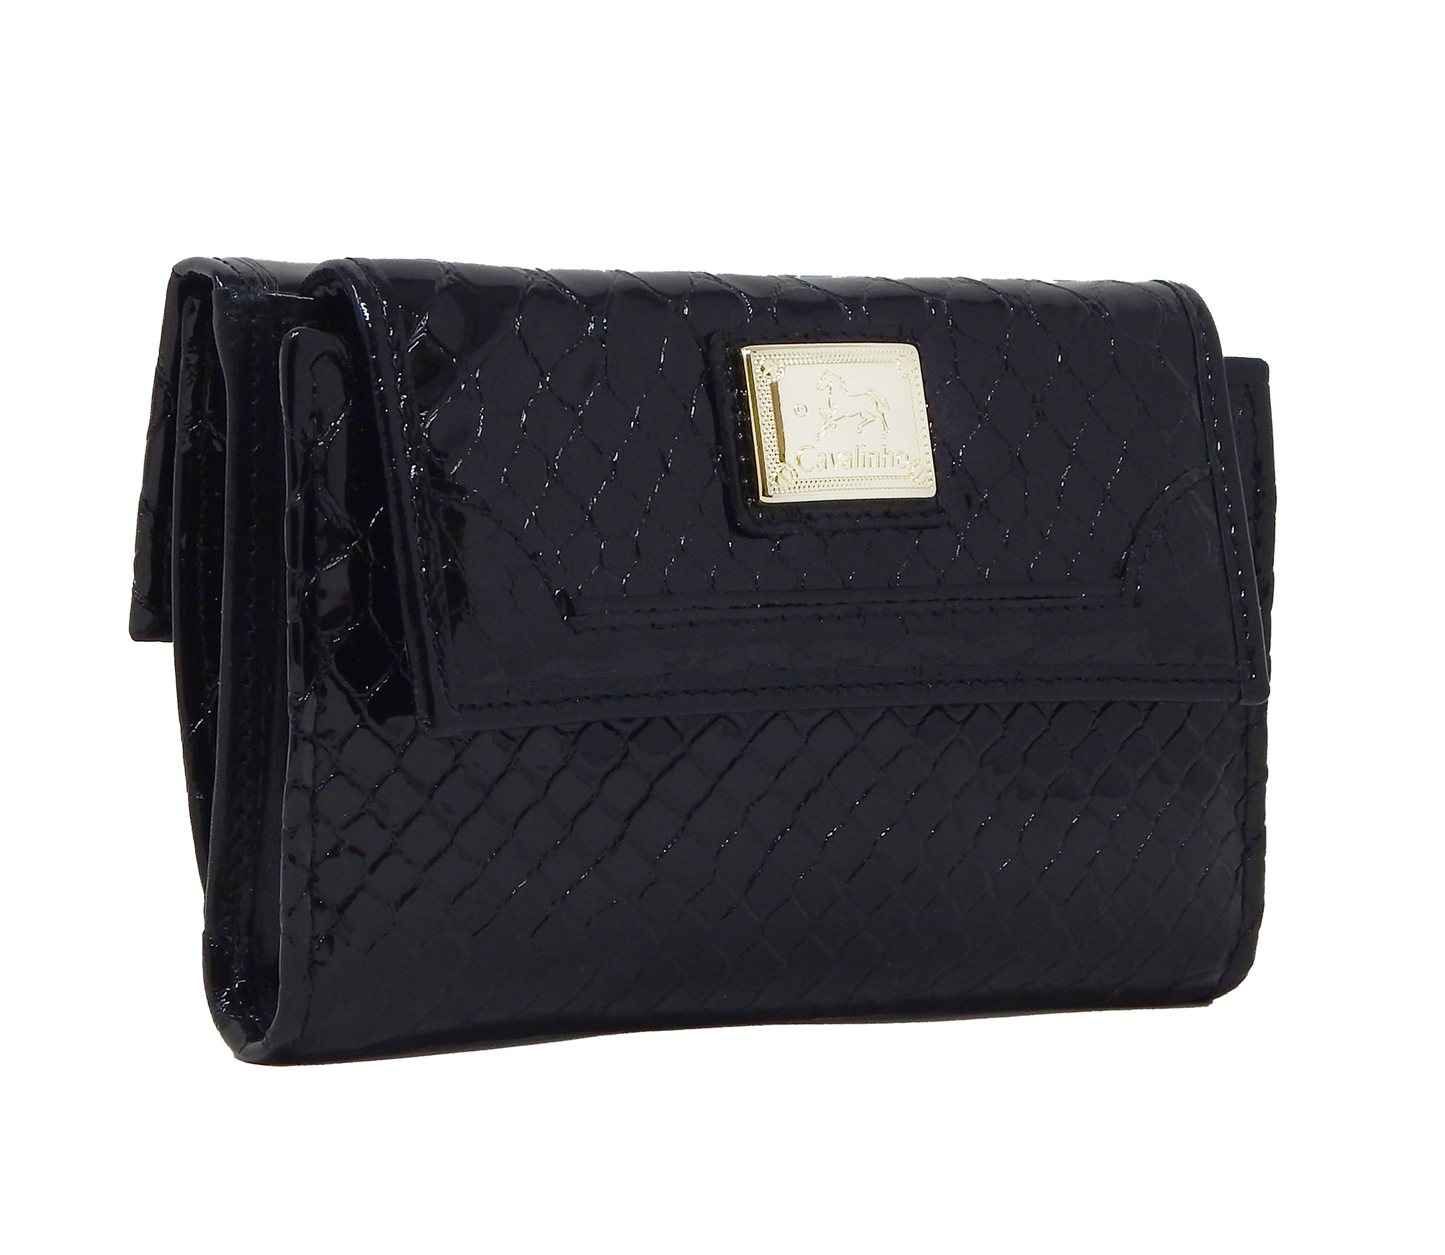 Cavalinho Galope Patent Leather Wallet - Black - 28170202.01_2